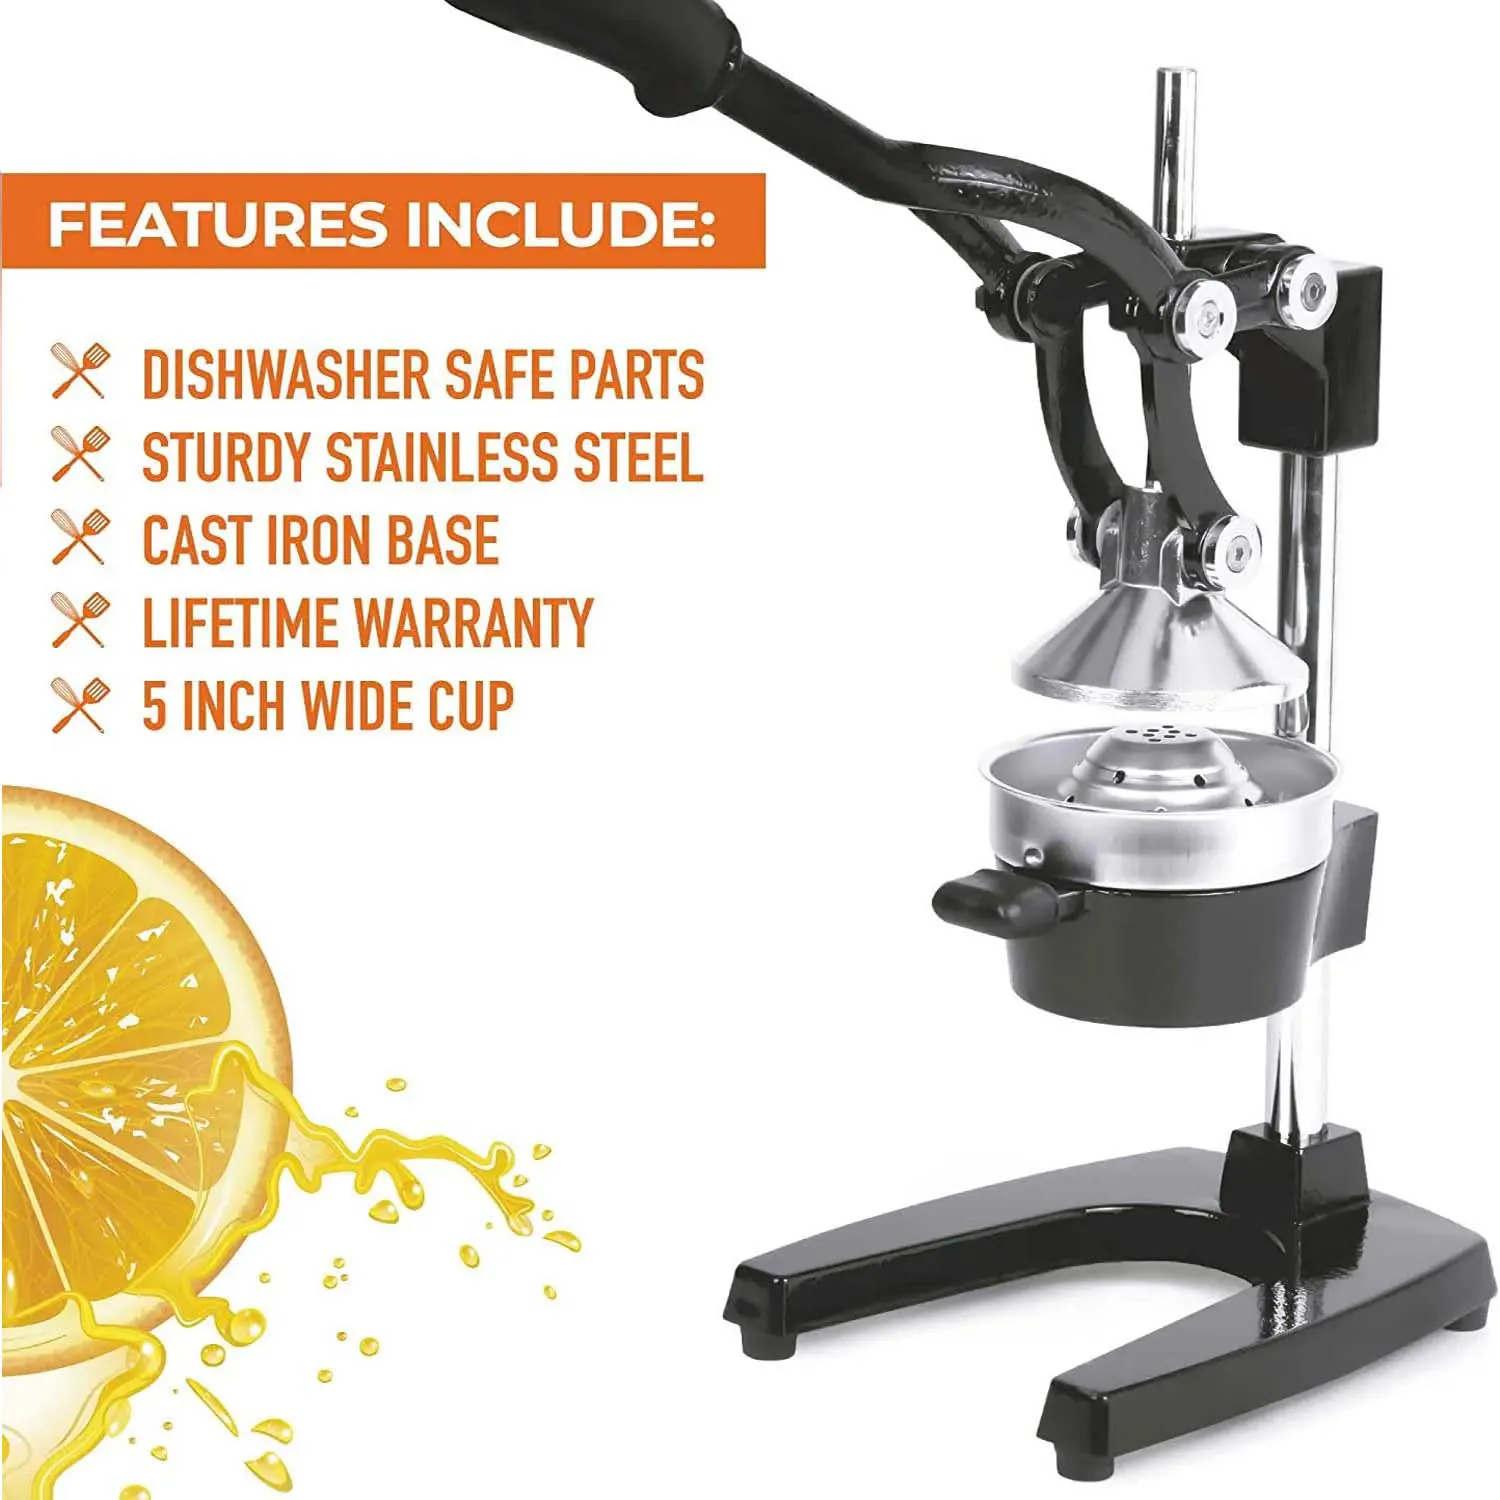 Professional Citrus Juicer + 2 In 1 Lemon Squeezer Complete Set